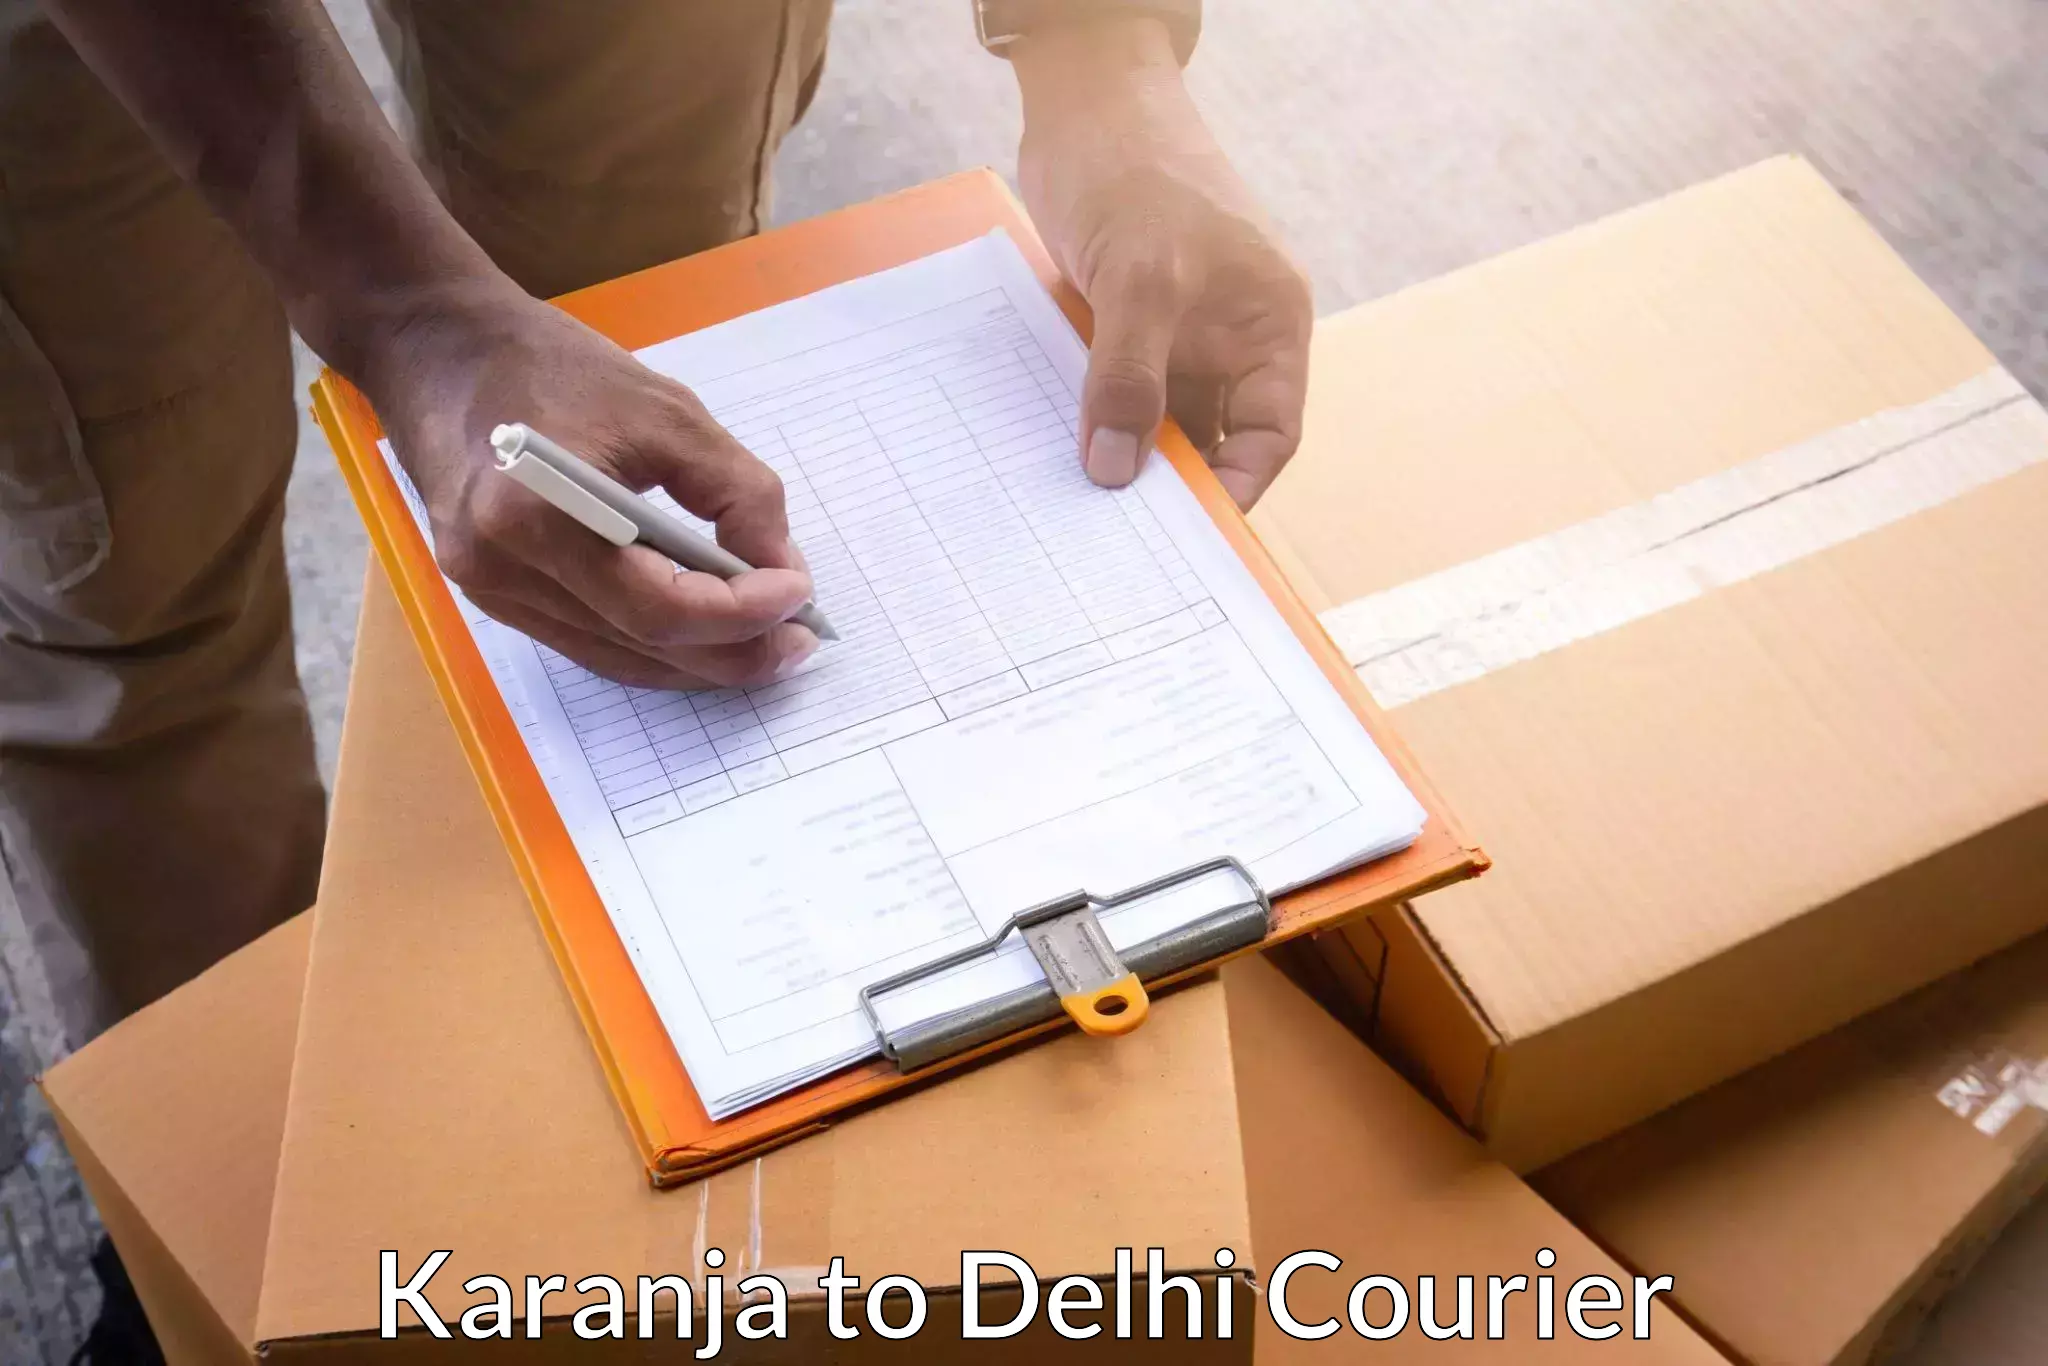 Quick dispatch service Karanja to NCR